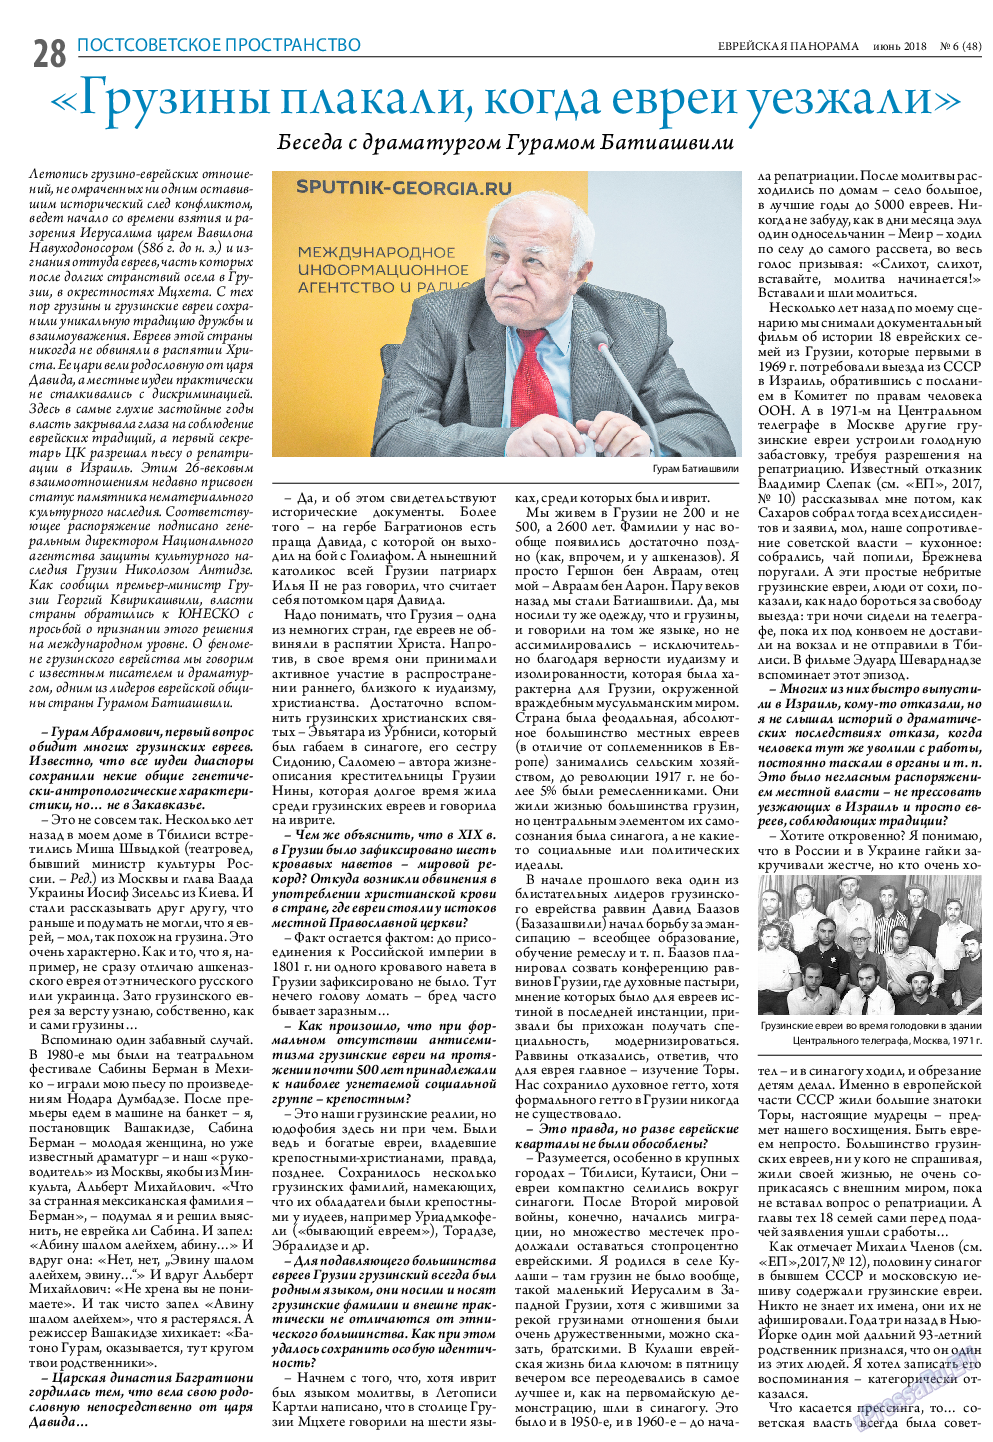 Еврейская панорама, газета. 2018 №6 стр.28